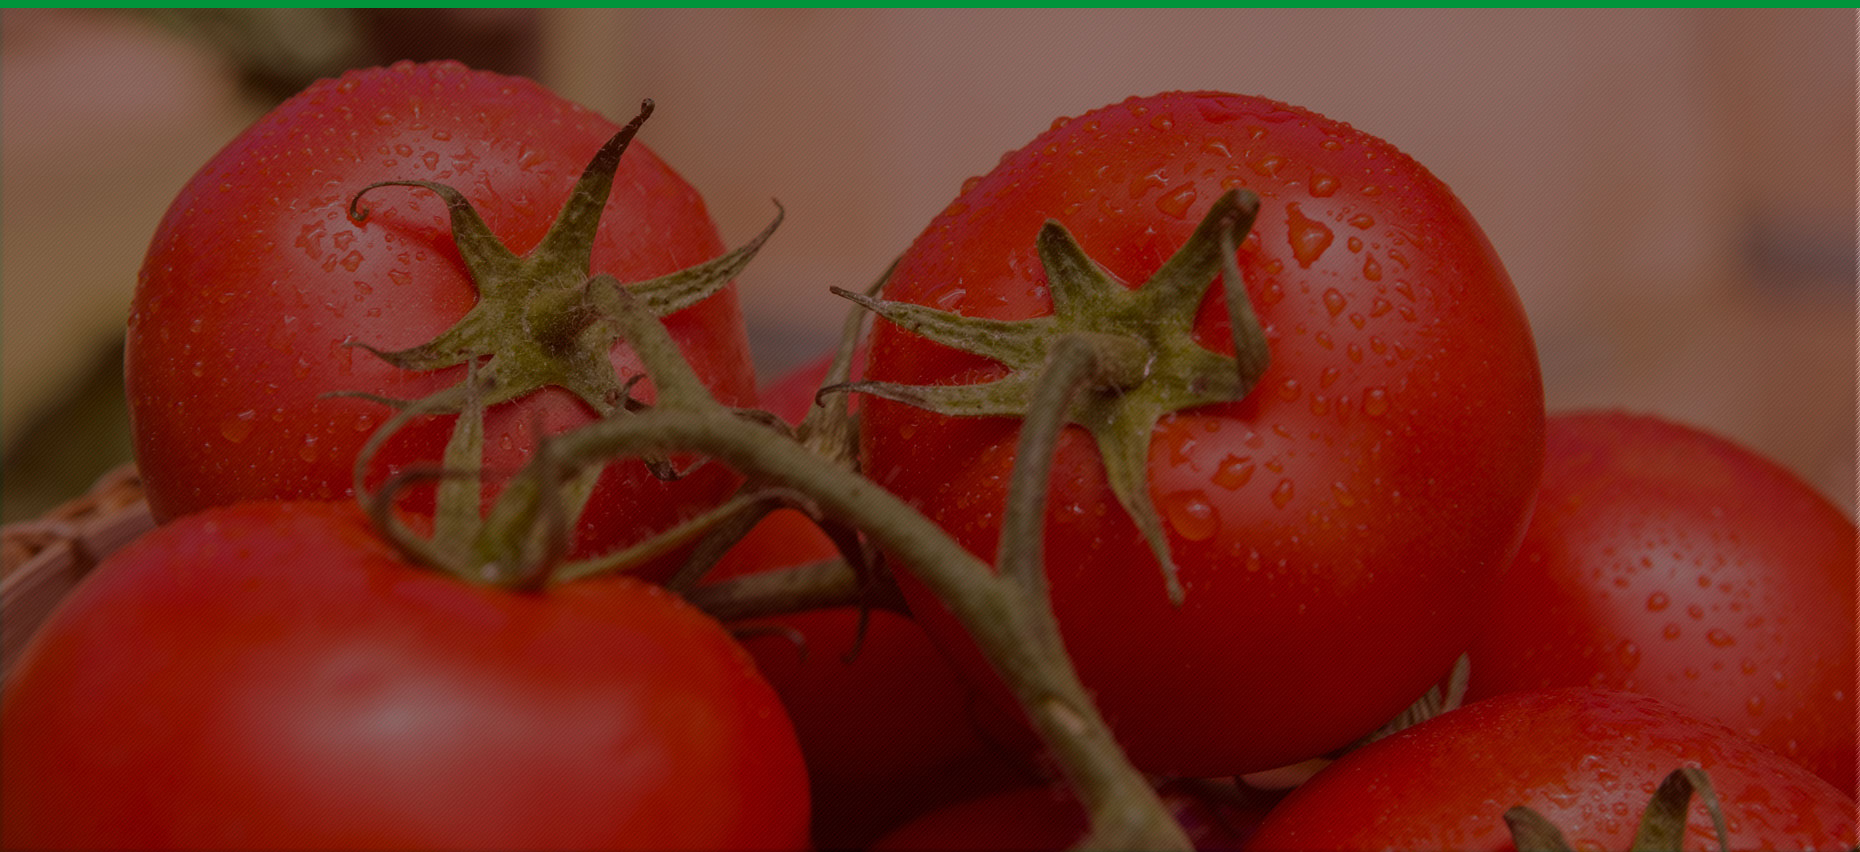 Producent pomidorów